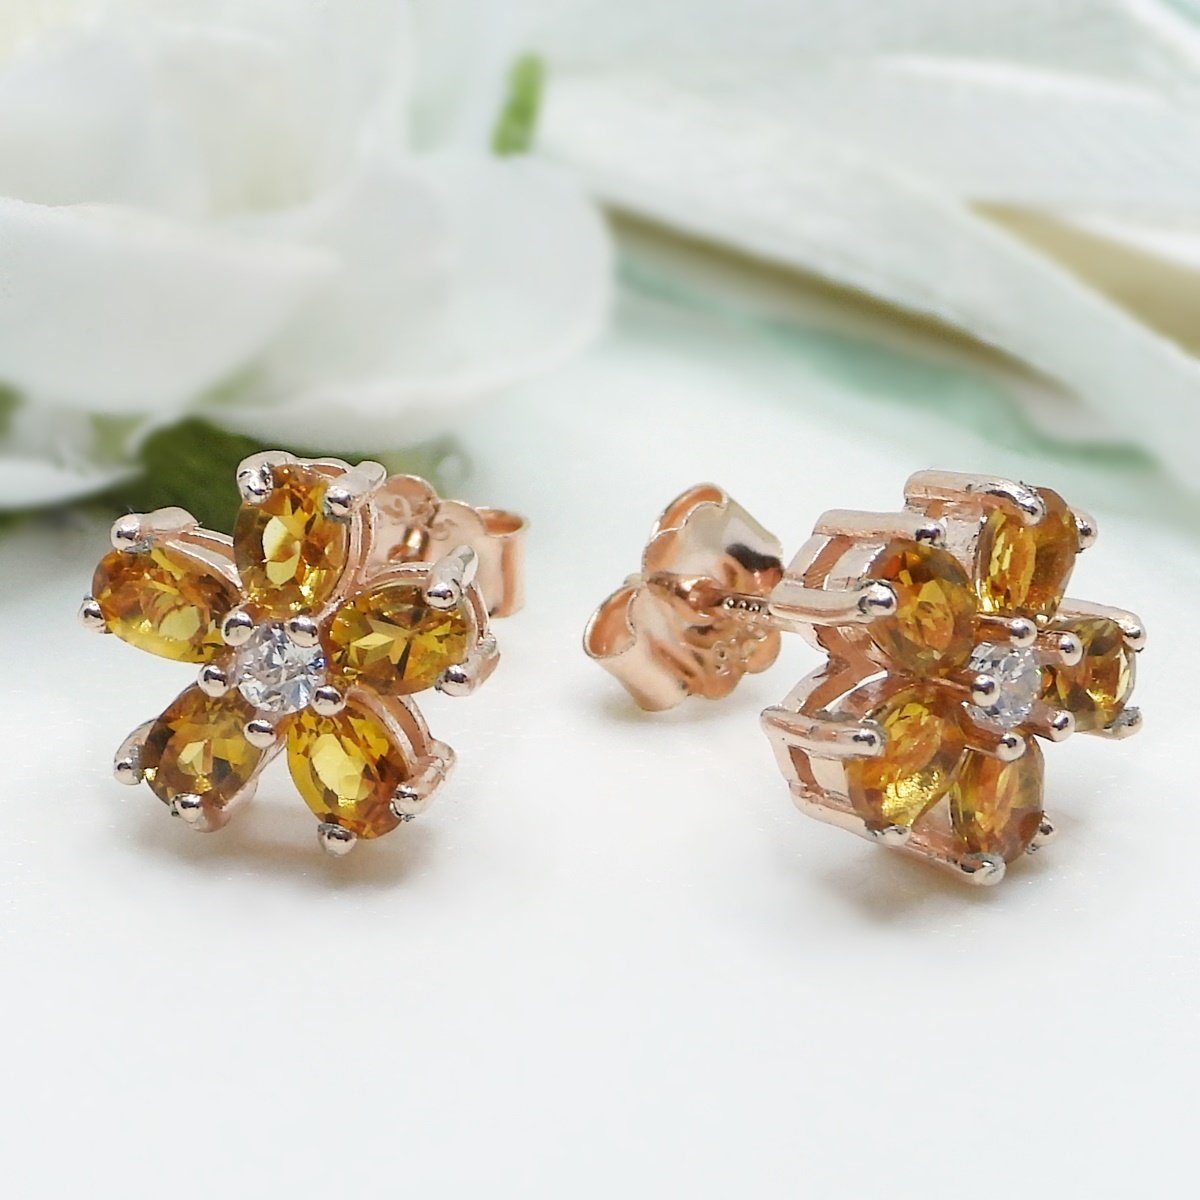 Goldene Ohrringe, Hufeisen Paar Ohrstecker Rosegold anlaufgeschützt Silber Edelsteine Citrin 925 Ohrstecker